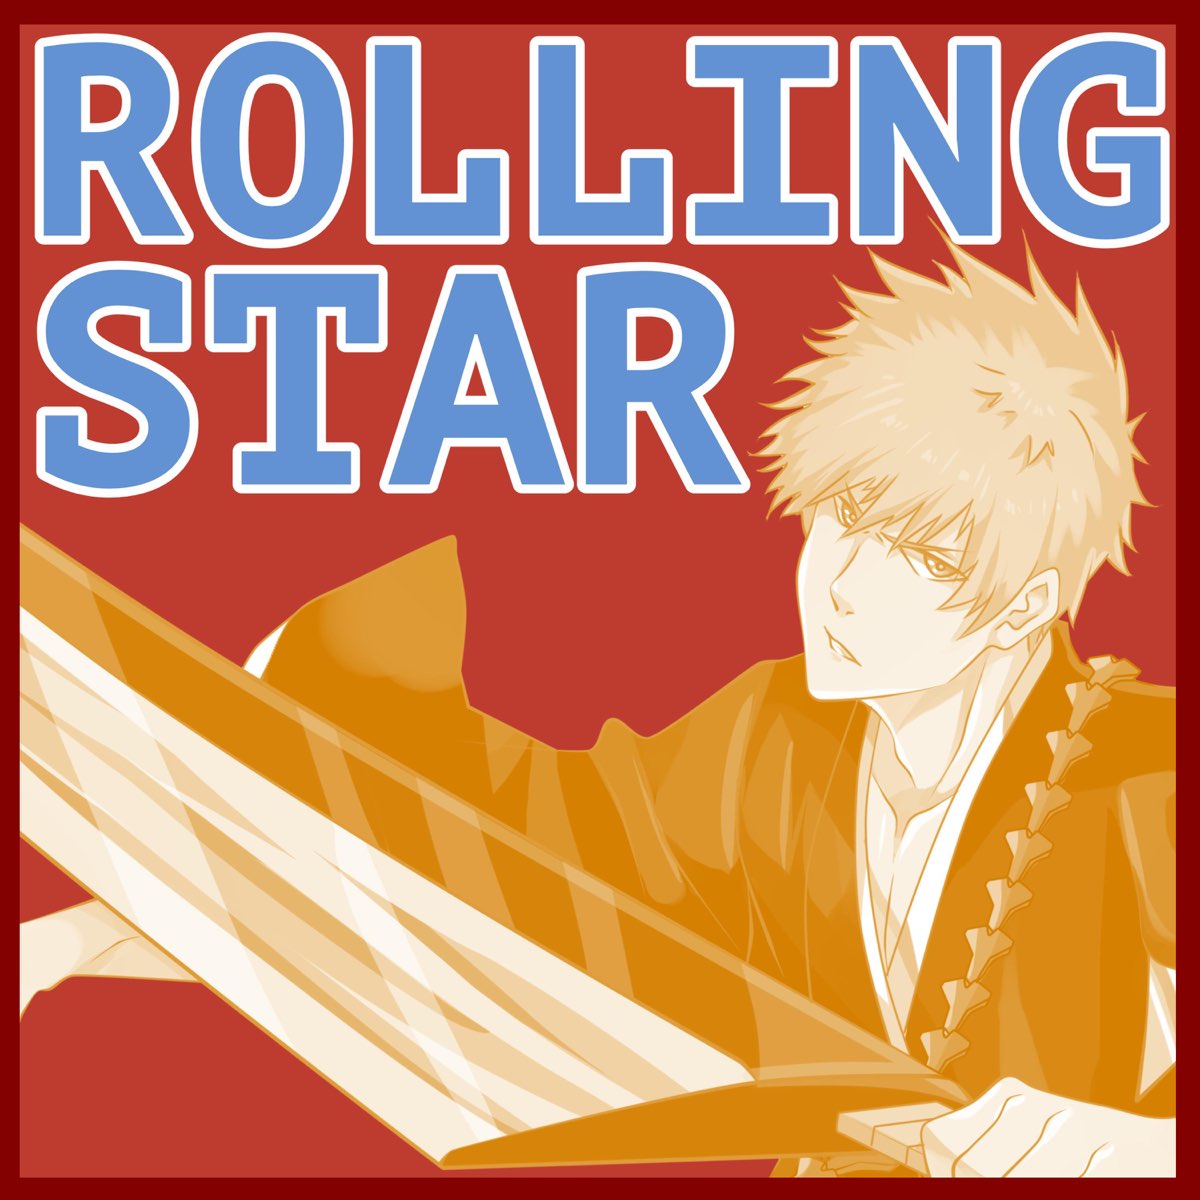 Rolling star. Rolling Star by Yui. Star Roll.